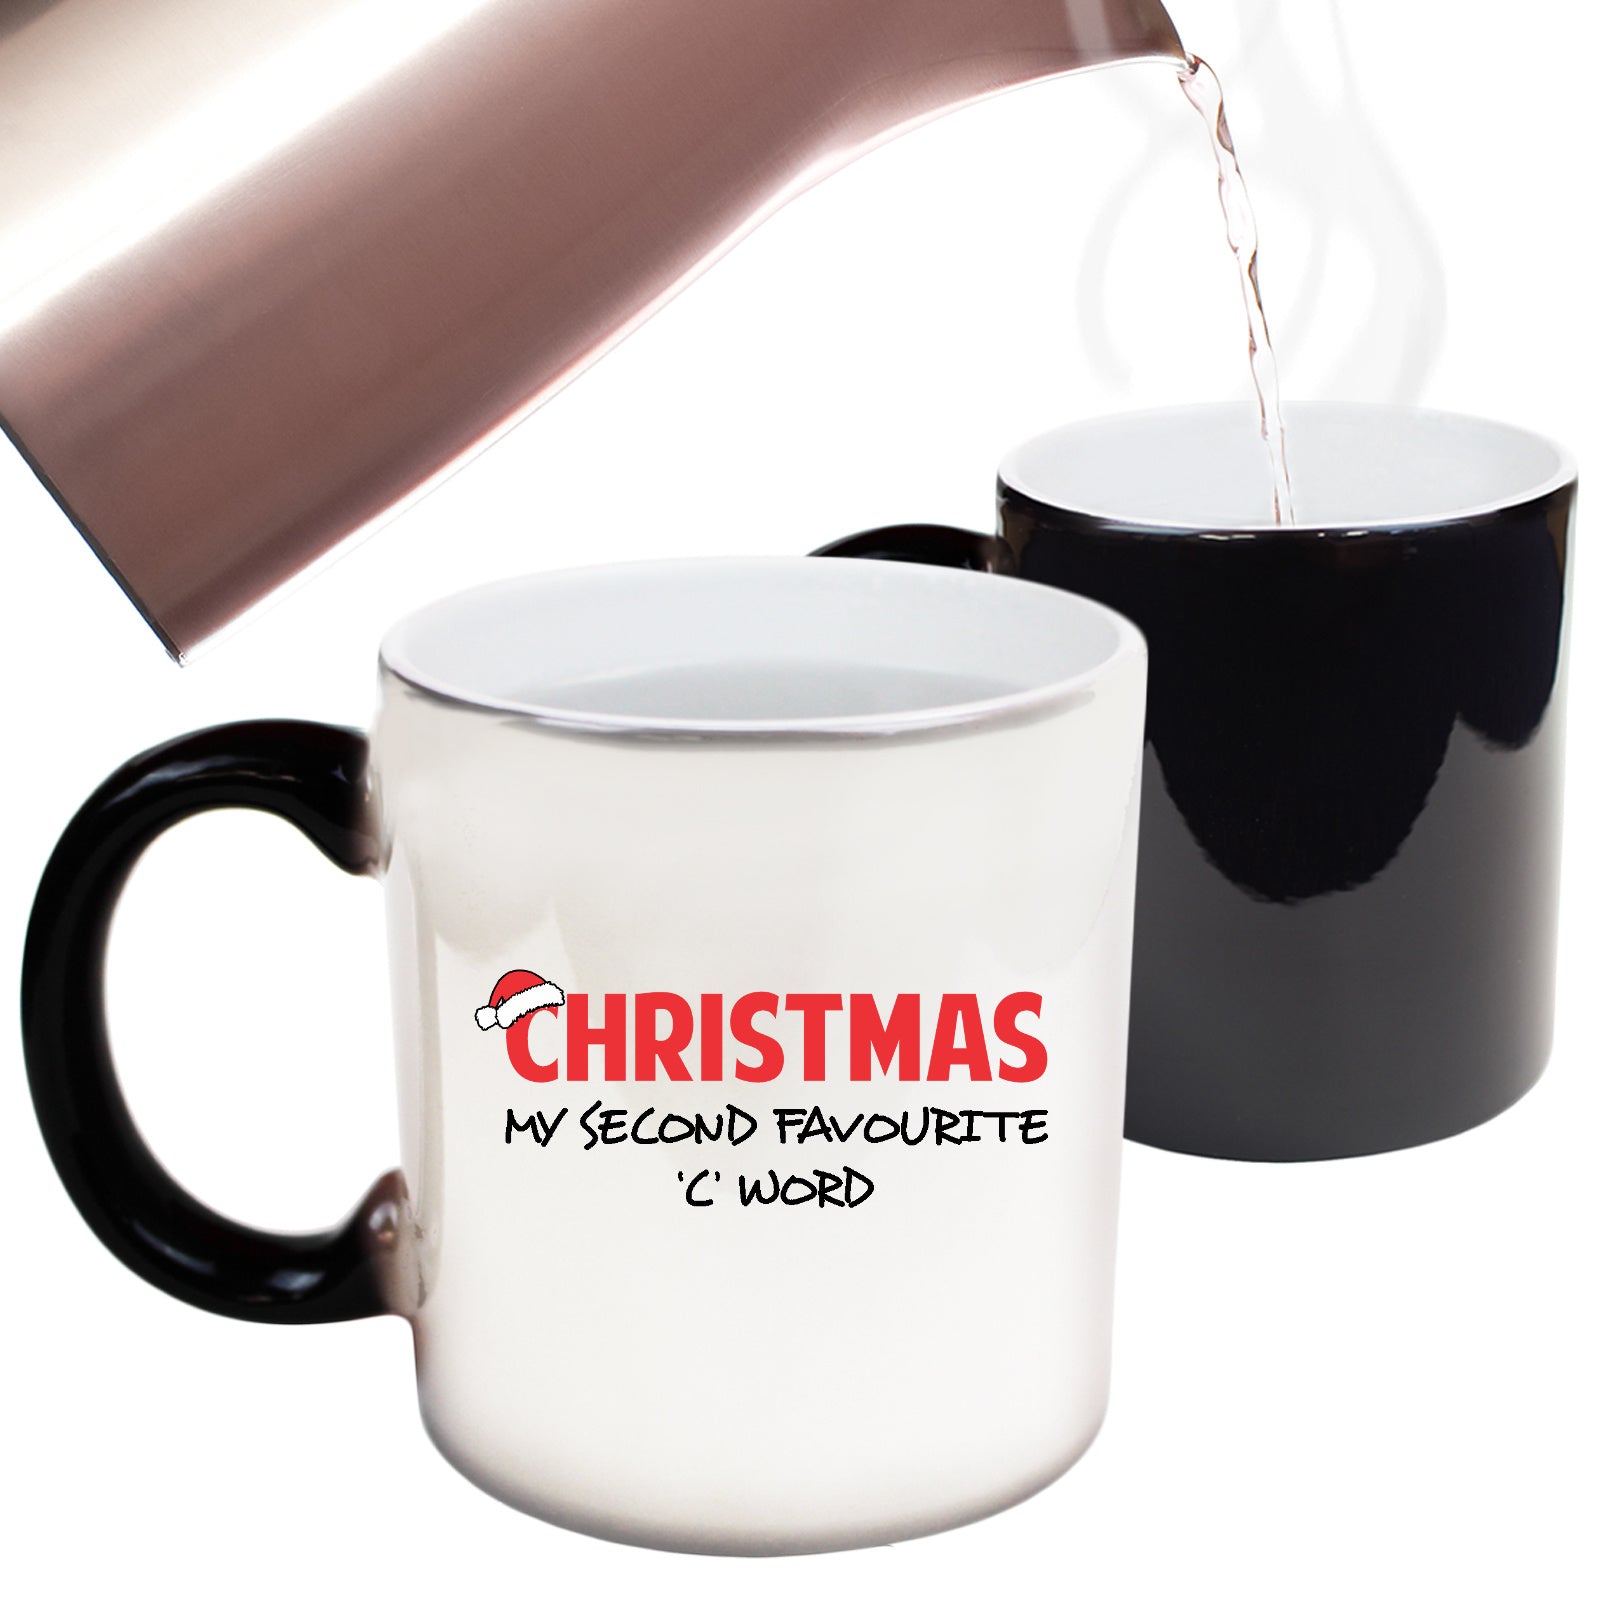 The Christmas Hub - Christmas My Second Favourite C Word - Funny Colour Changing Mug